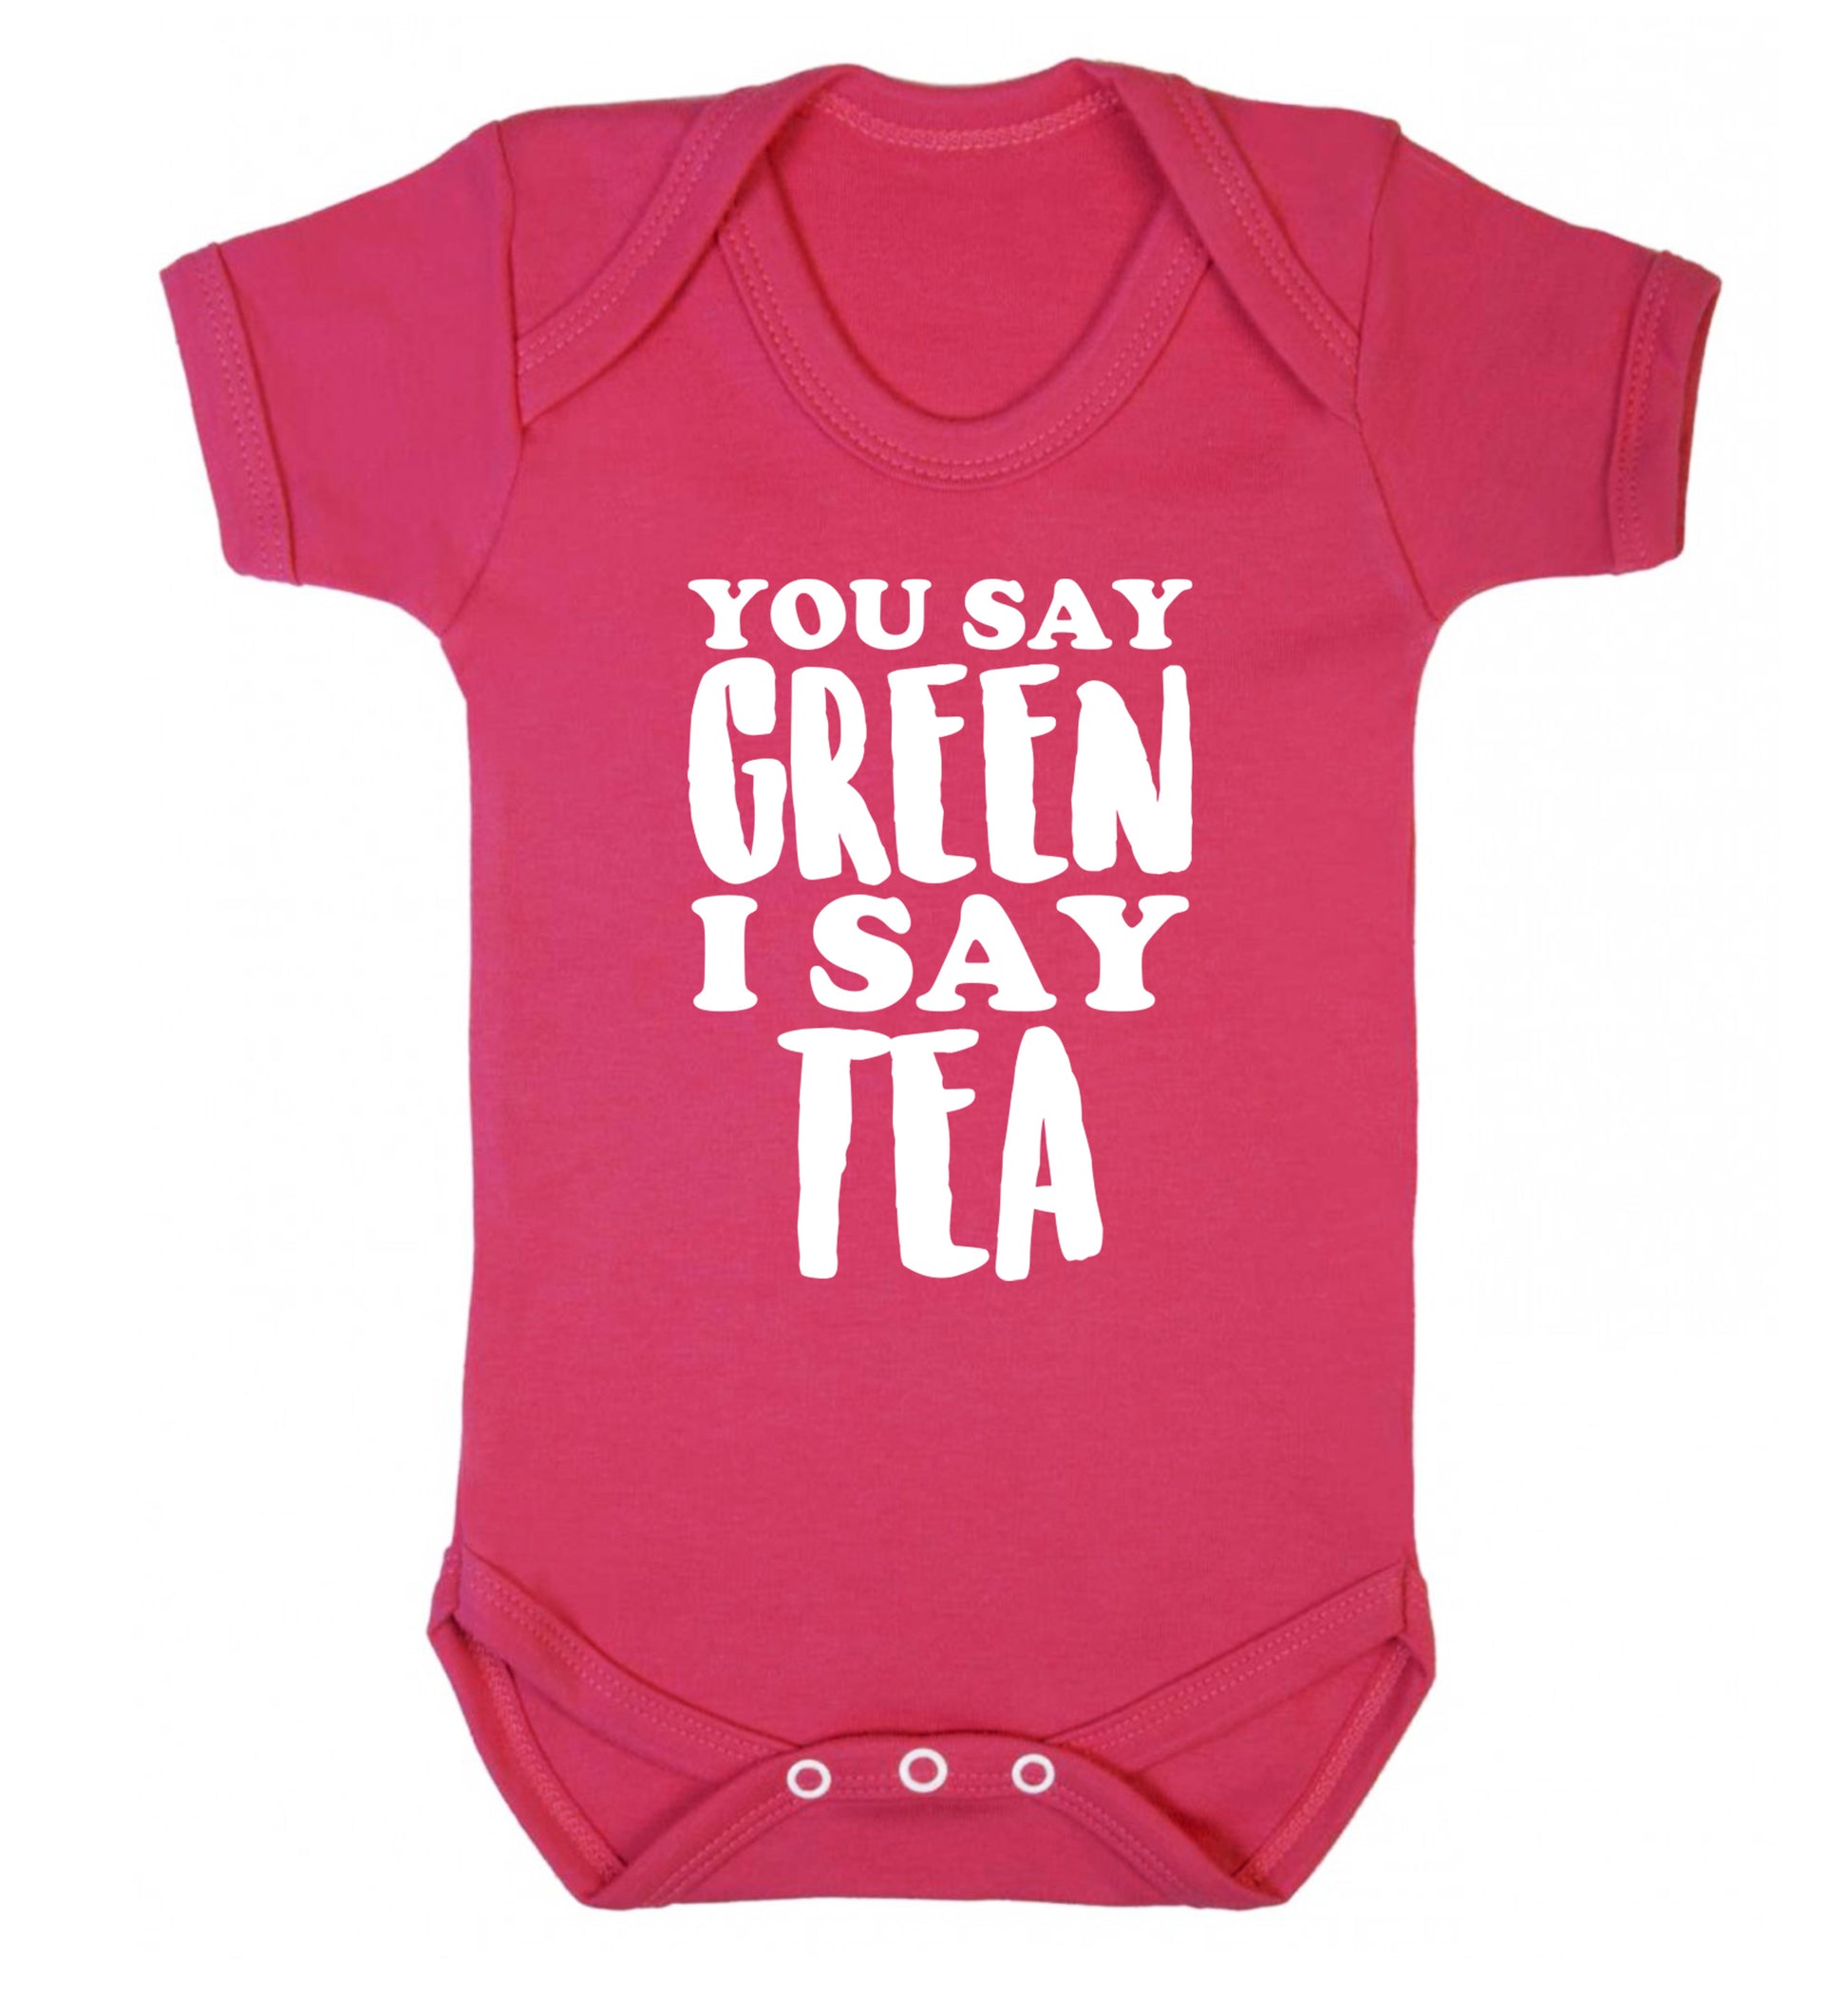 You say green I say tea! Baby Vest dark pink 18-24 months